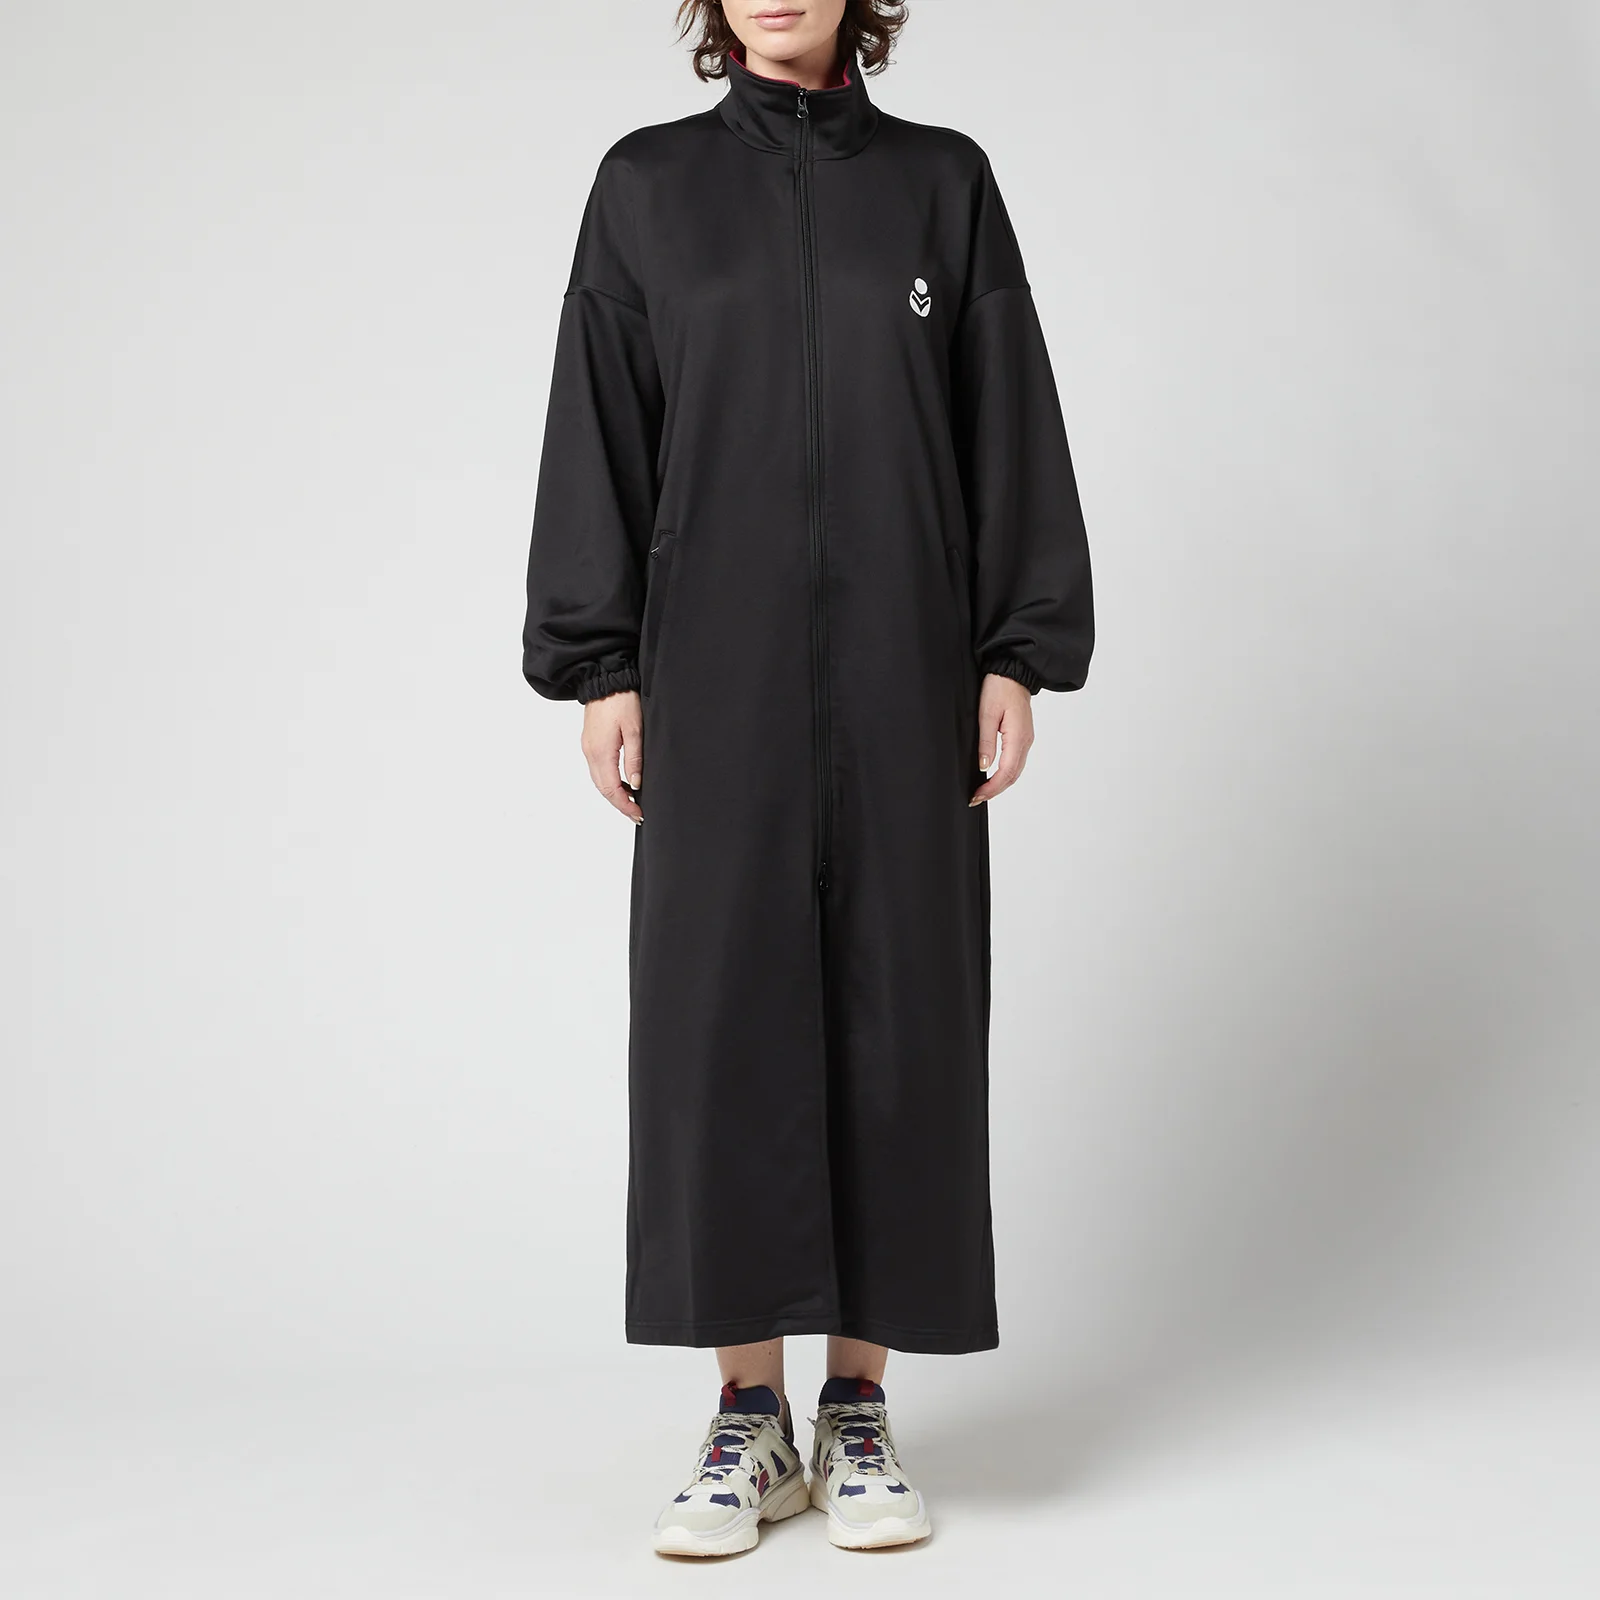 Marant Étoile Women's Issopa Jacket - Black Image 1